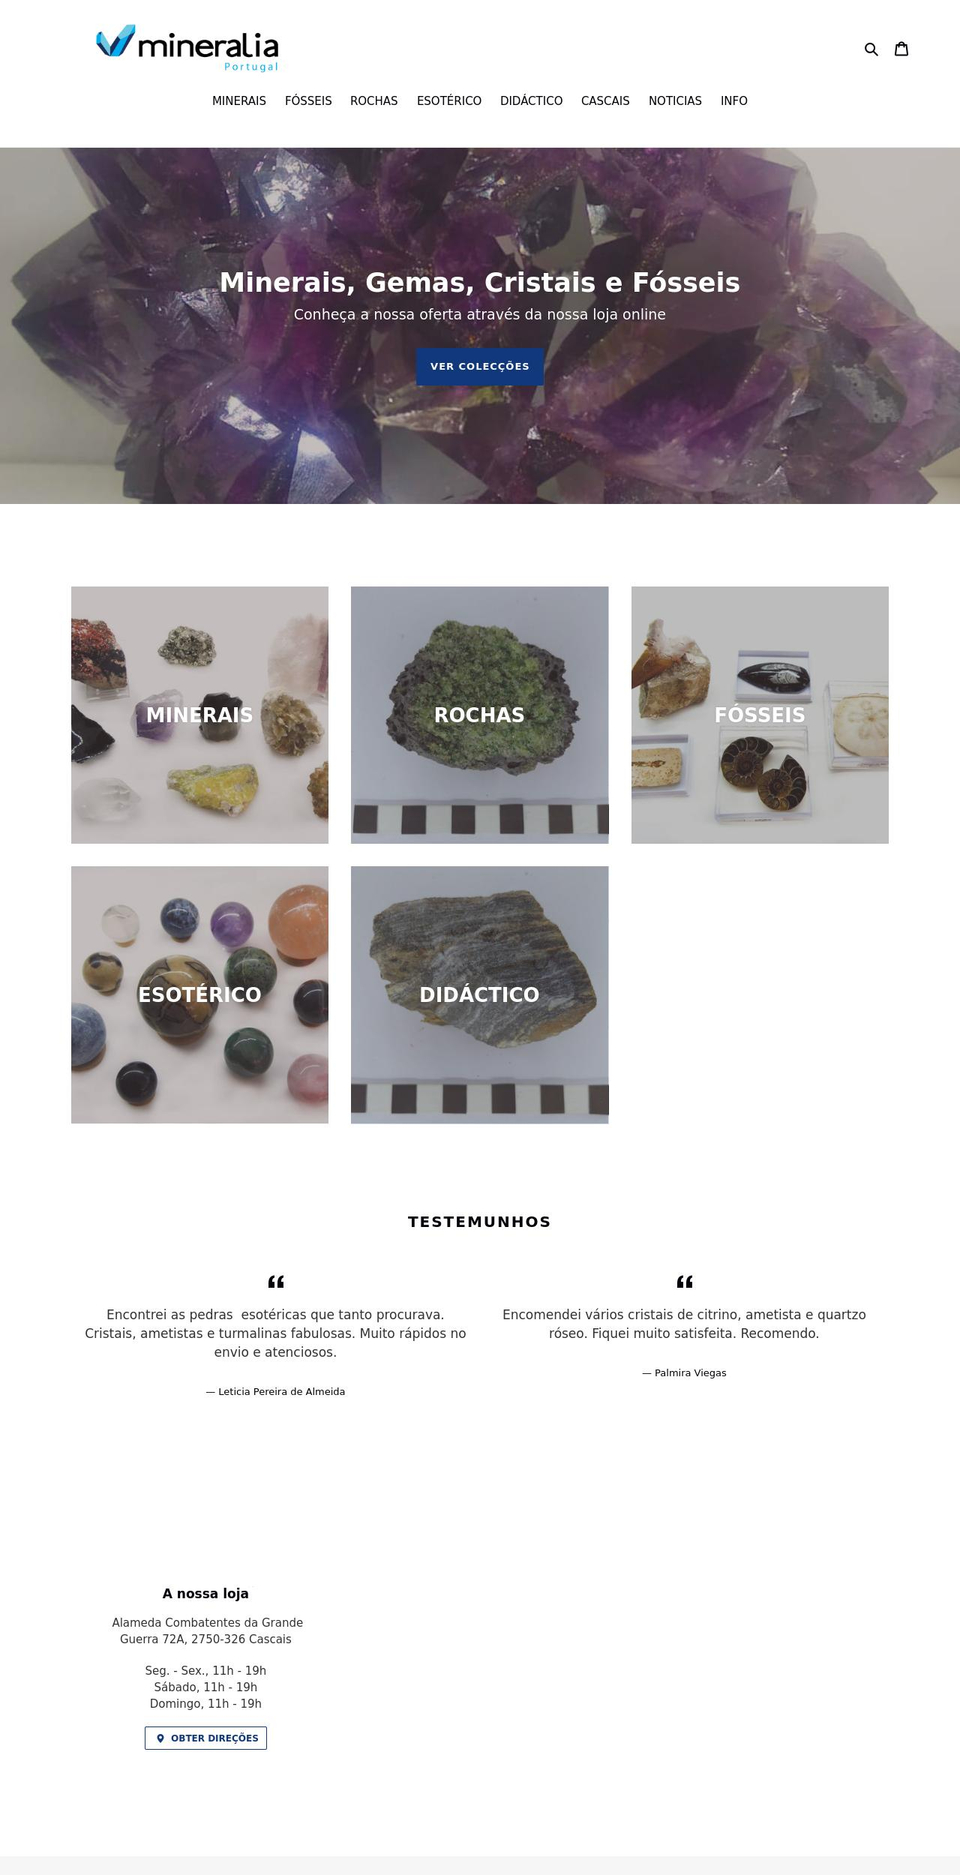 mineraliaportugal.com shopify website screenshot